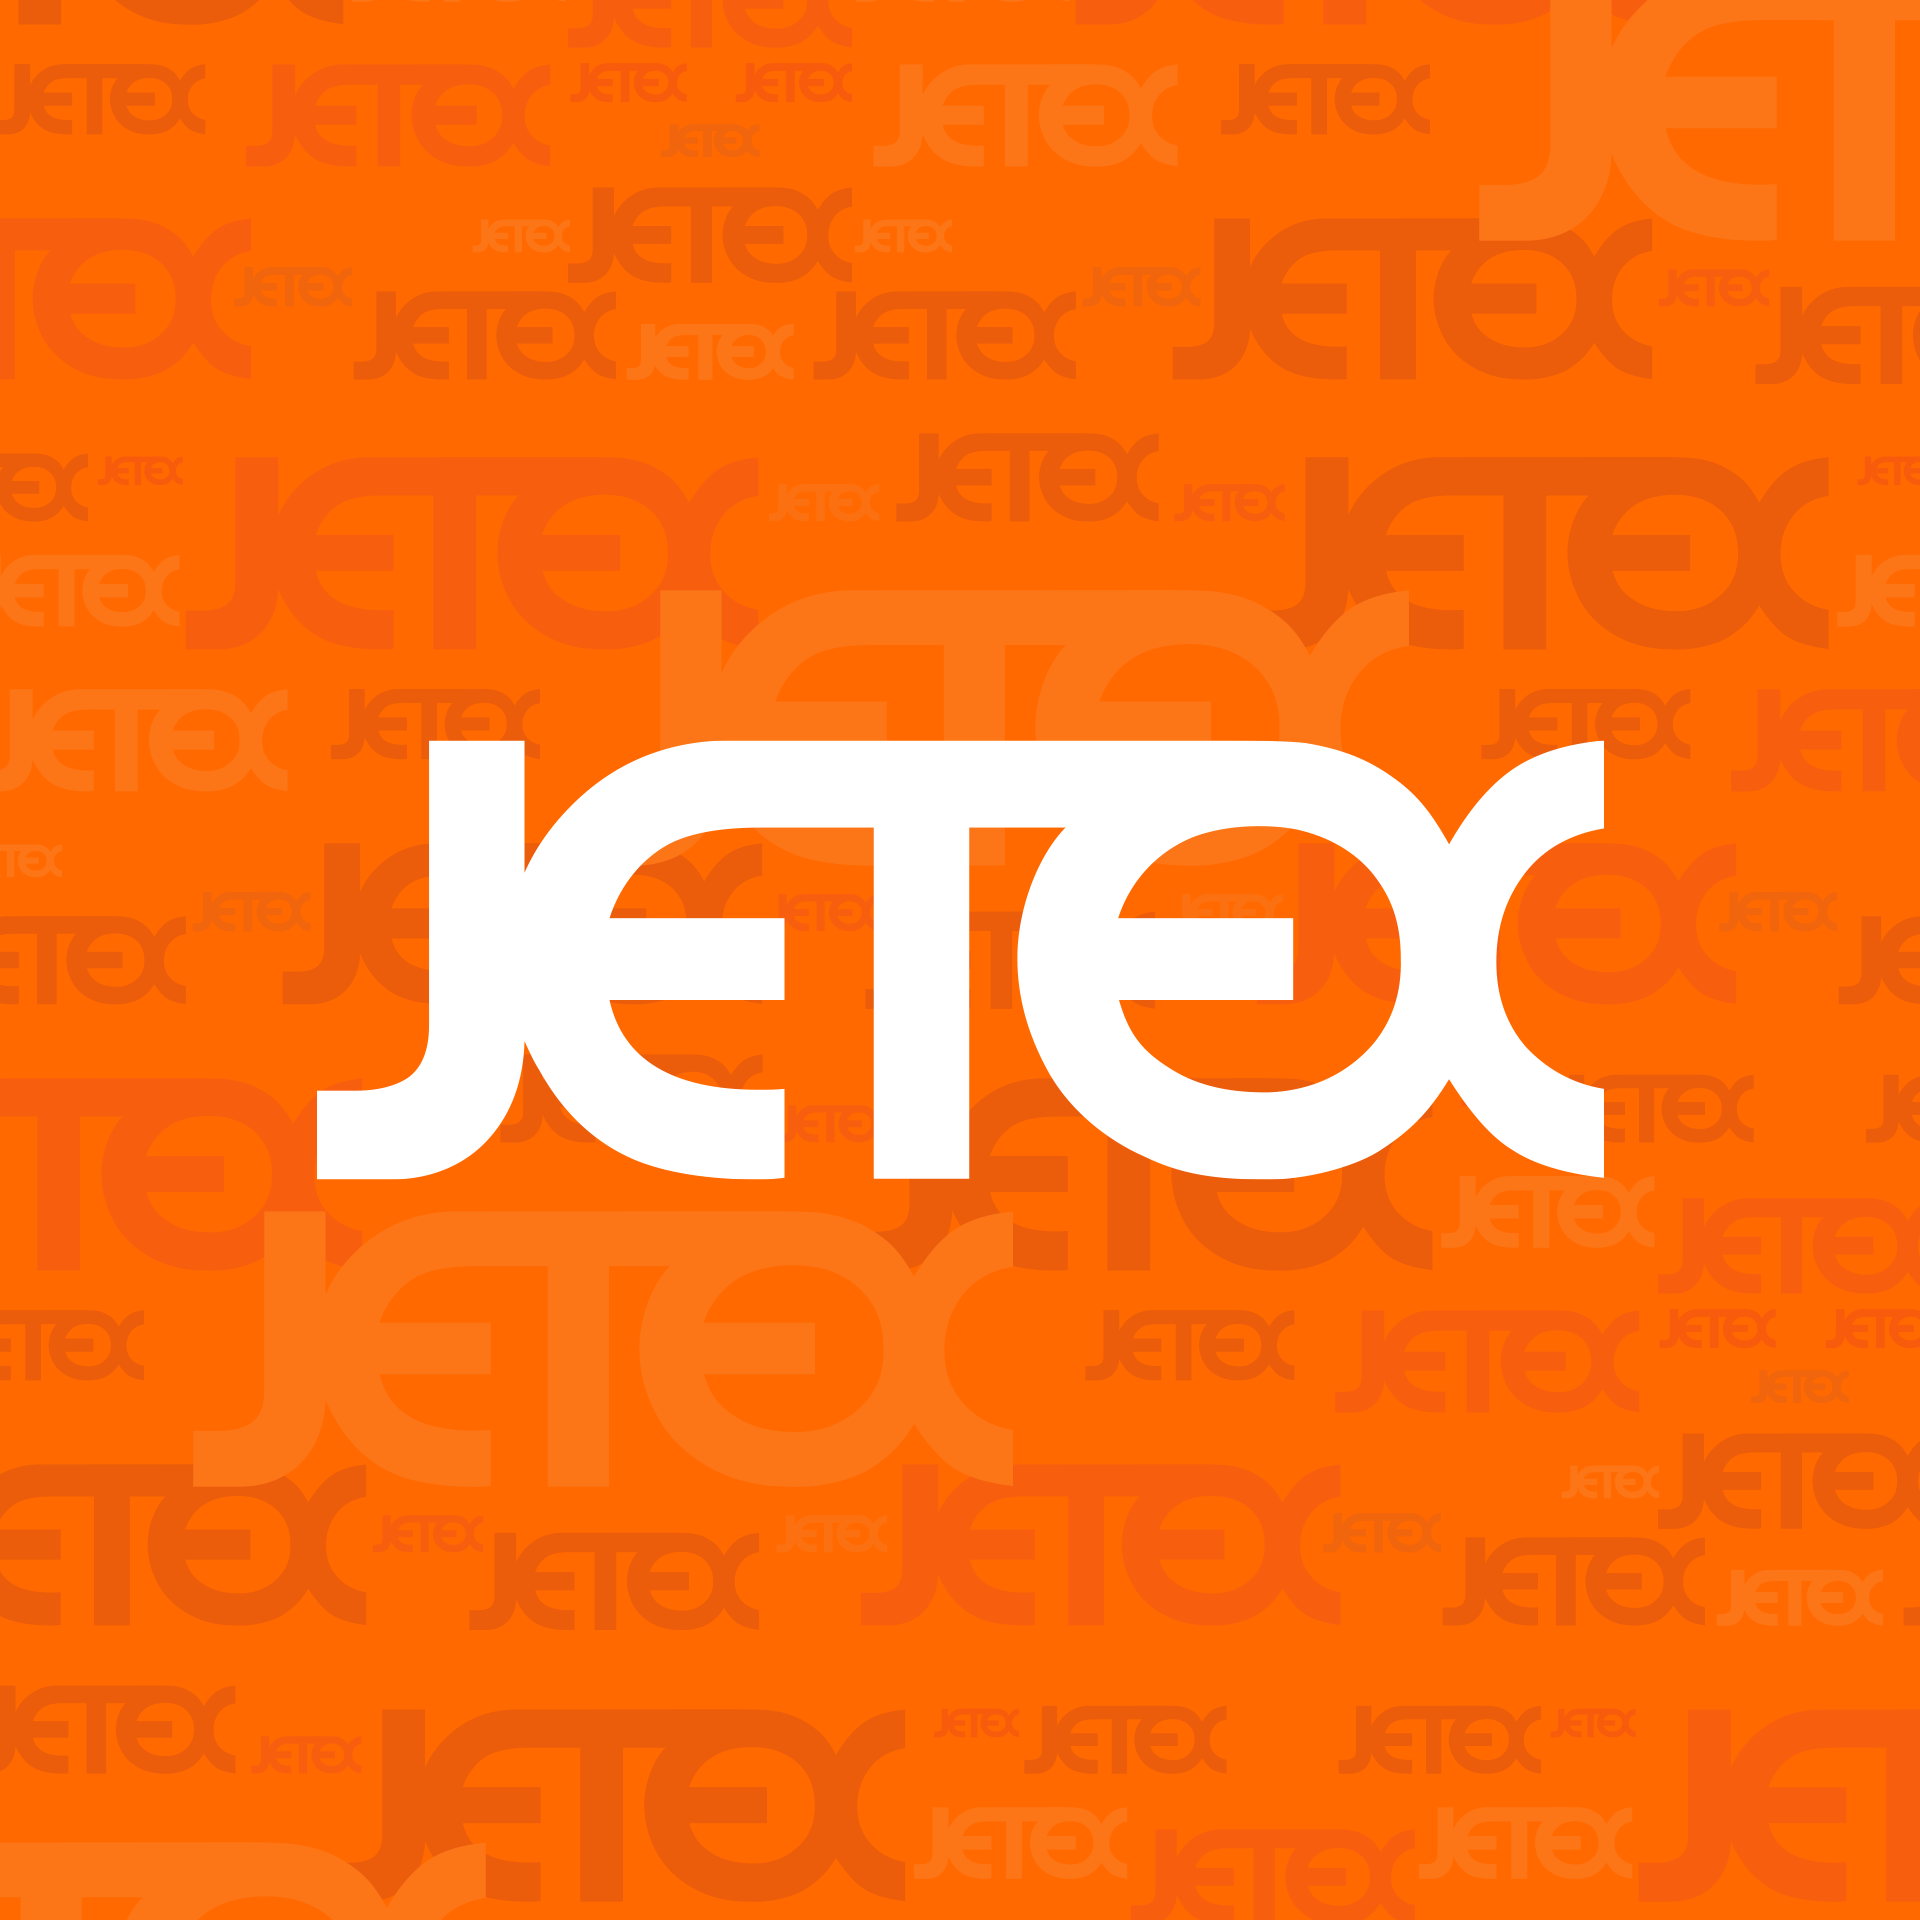 Jetex London Logo